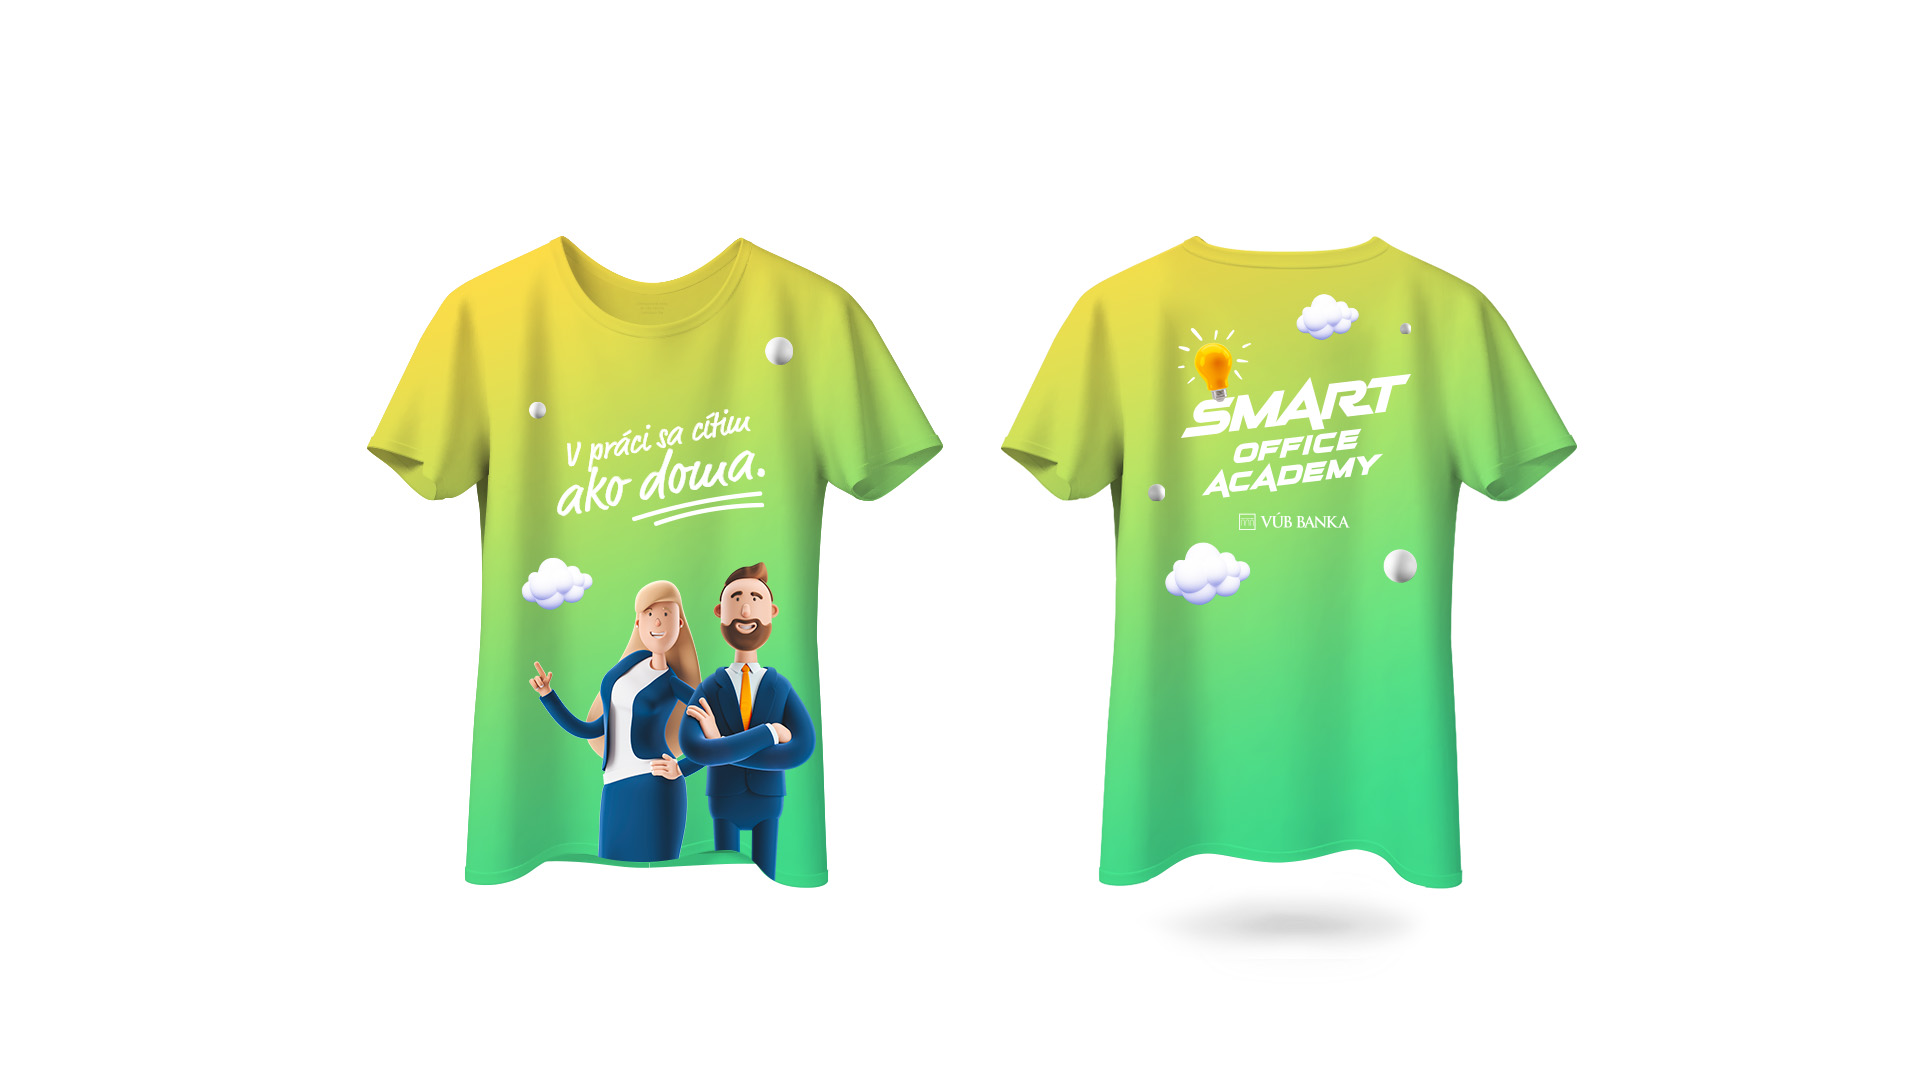 VÚB – Smart Office Academy – tričko